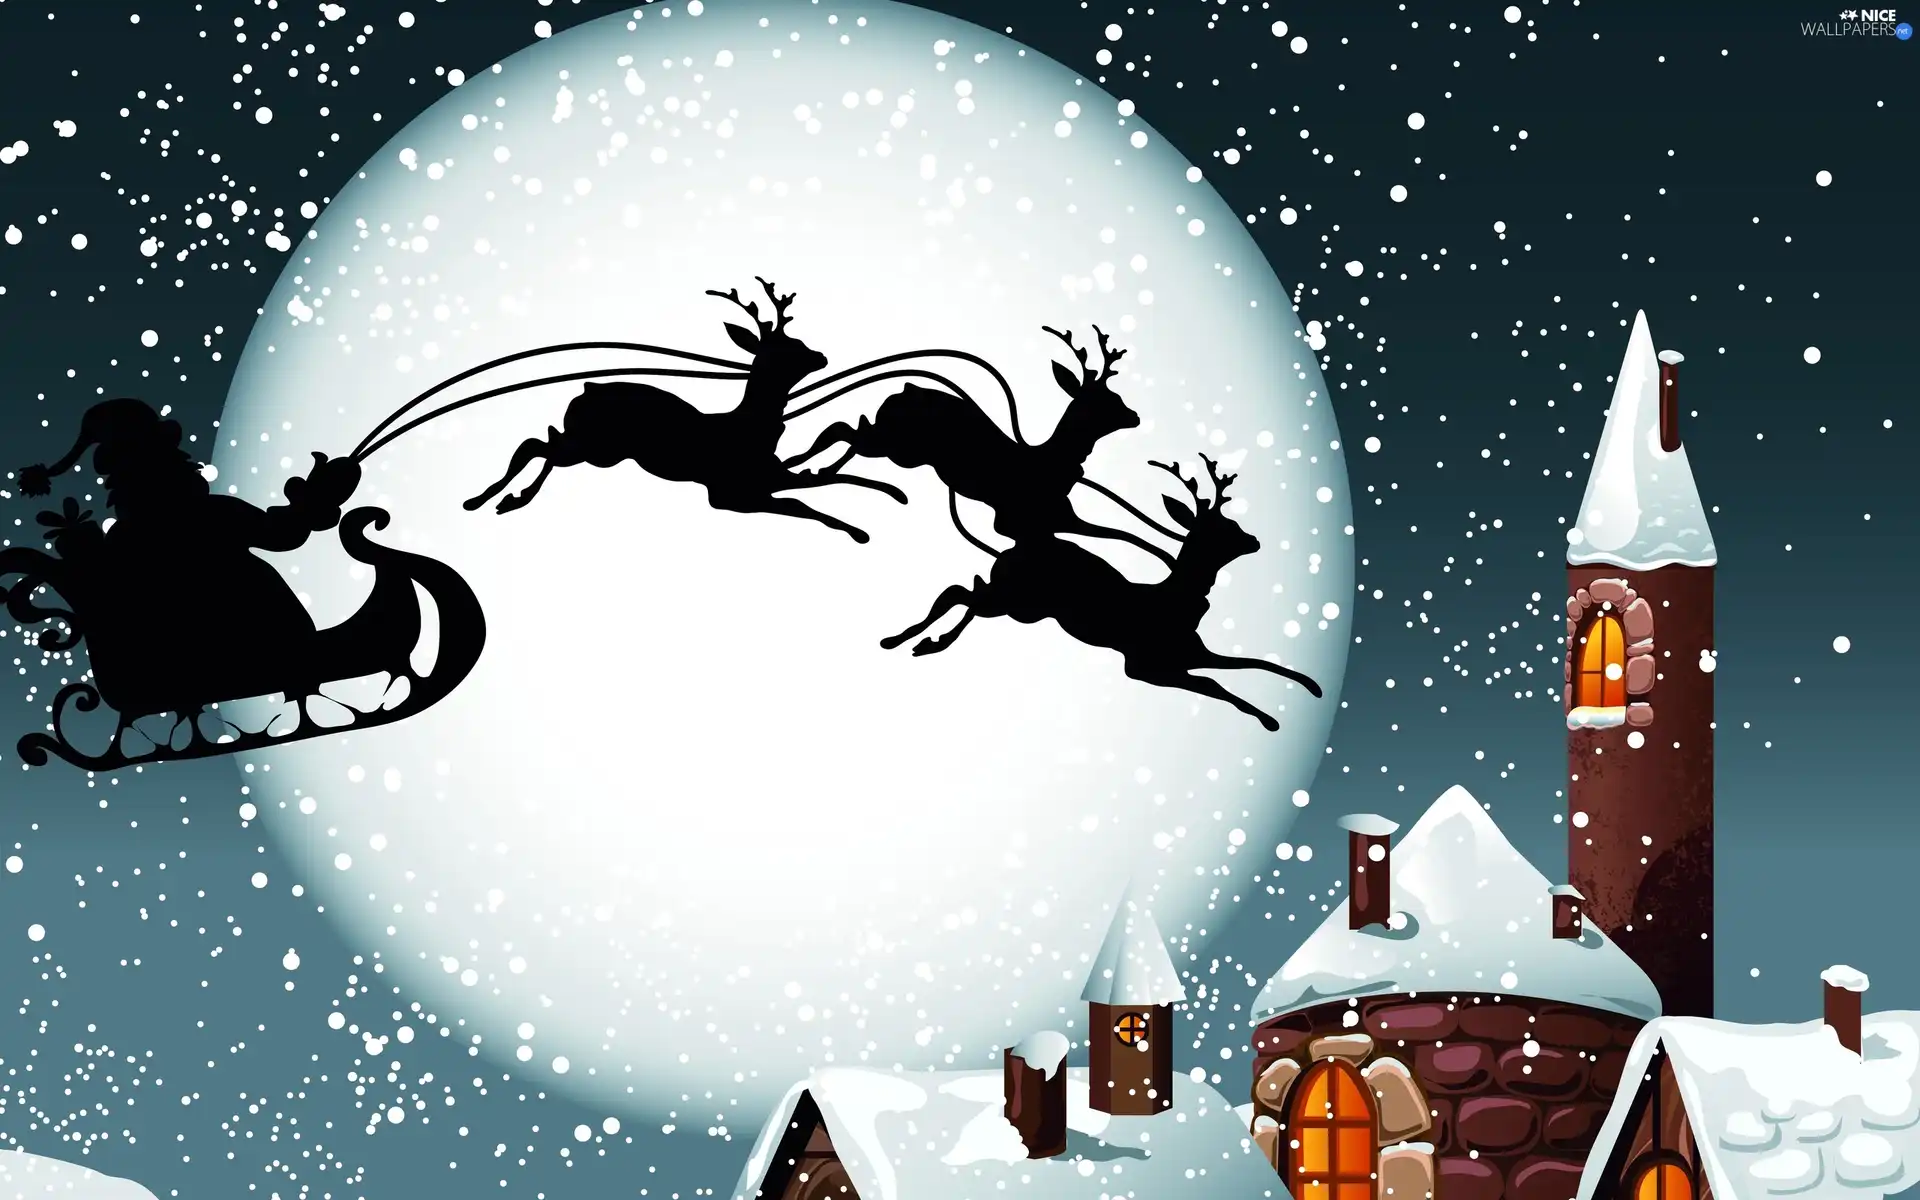 Santa, house, winter, sleigh